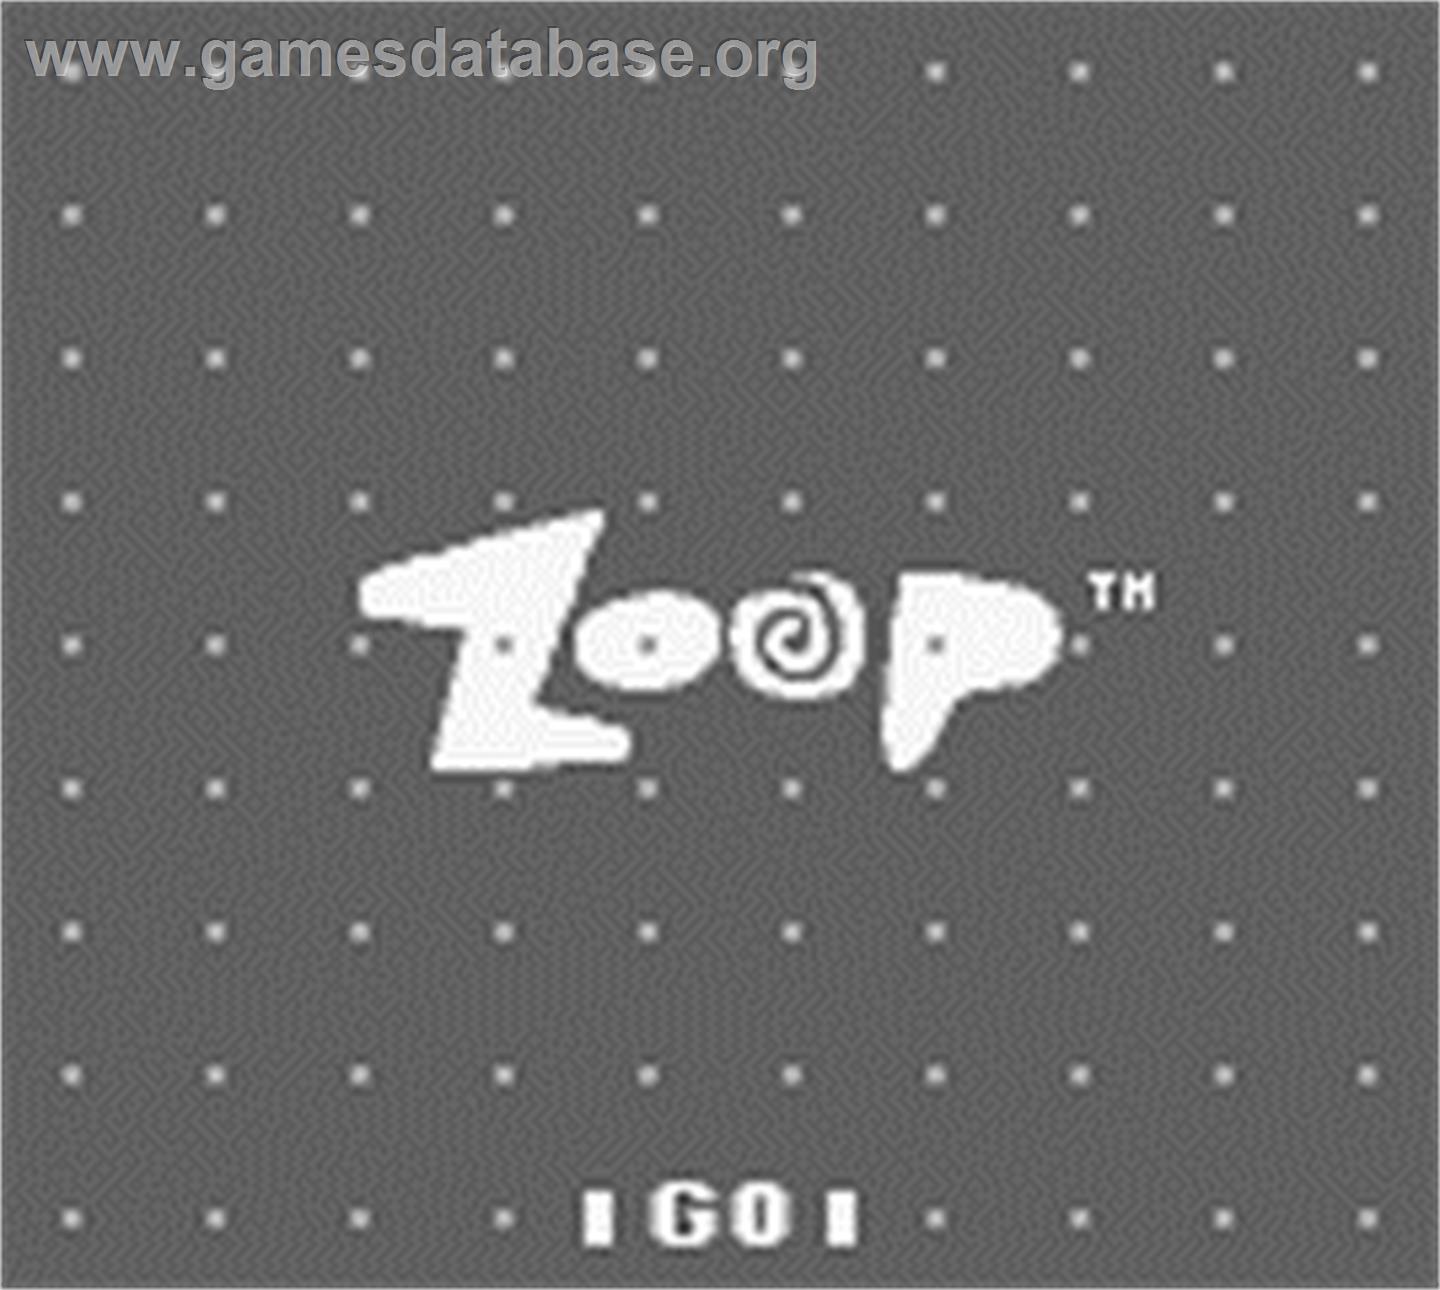 Zoop - Nintendo Game Boy - Artwork - Title Screen